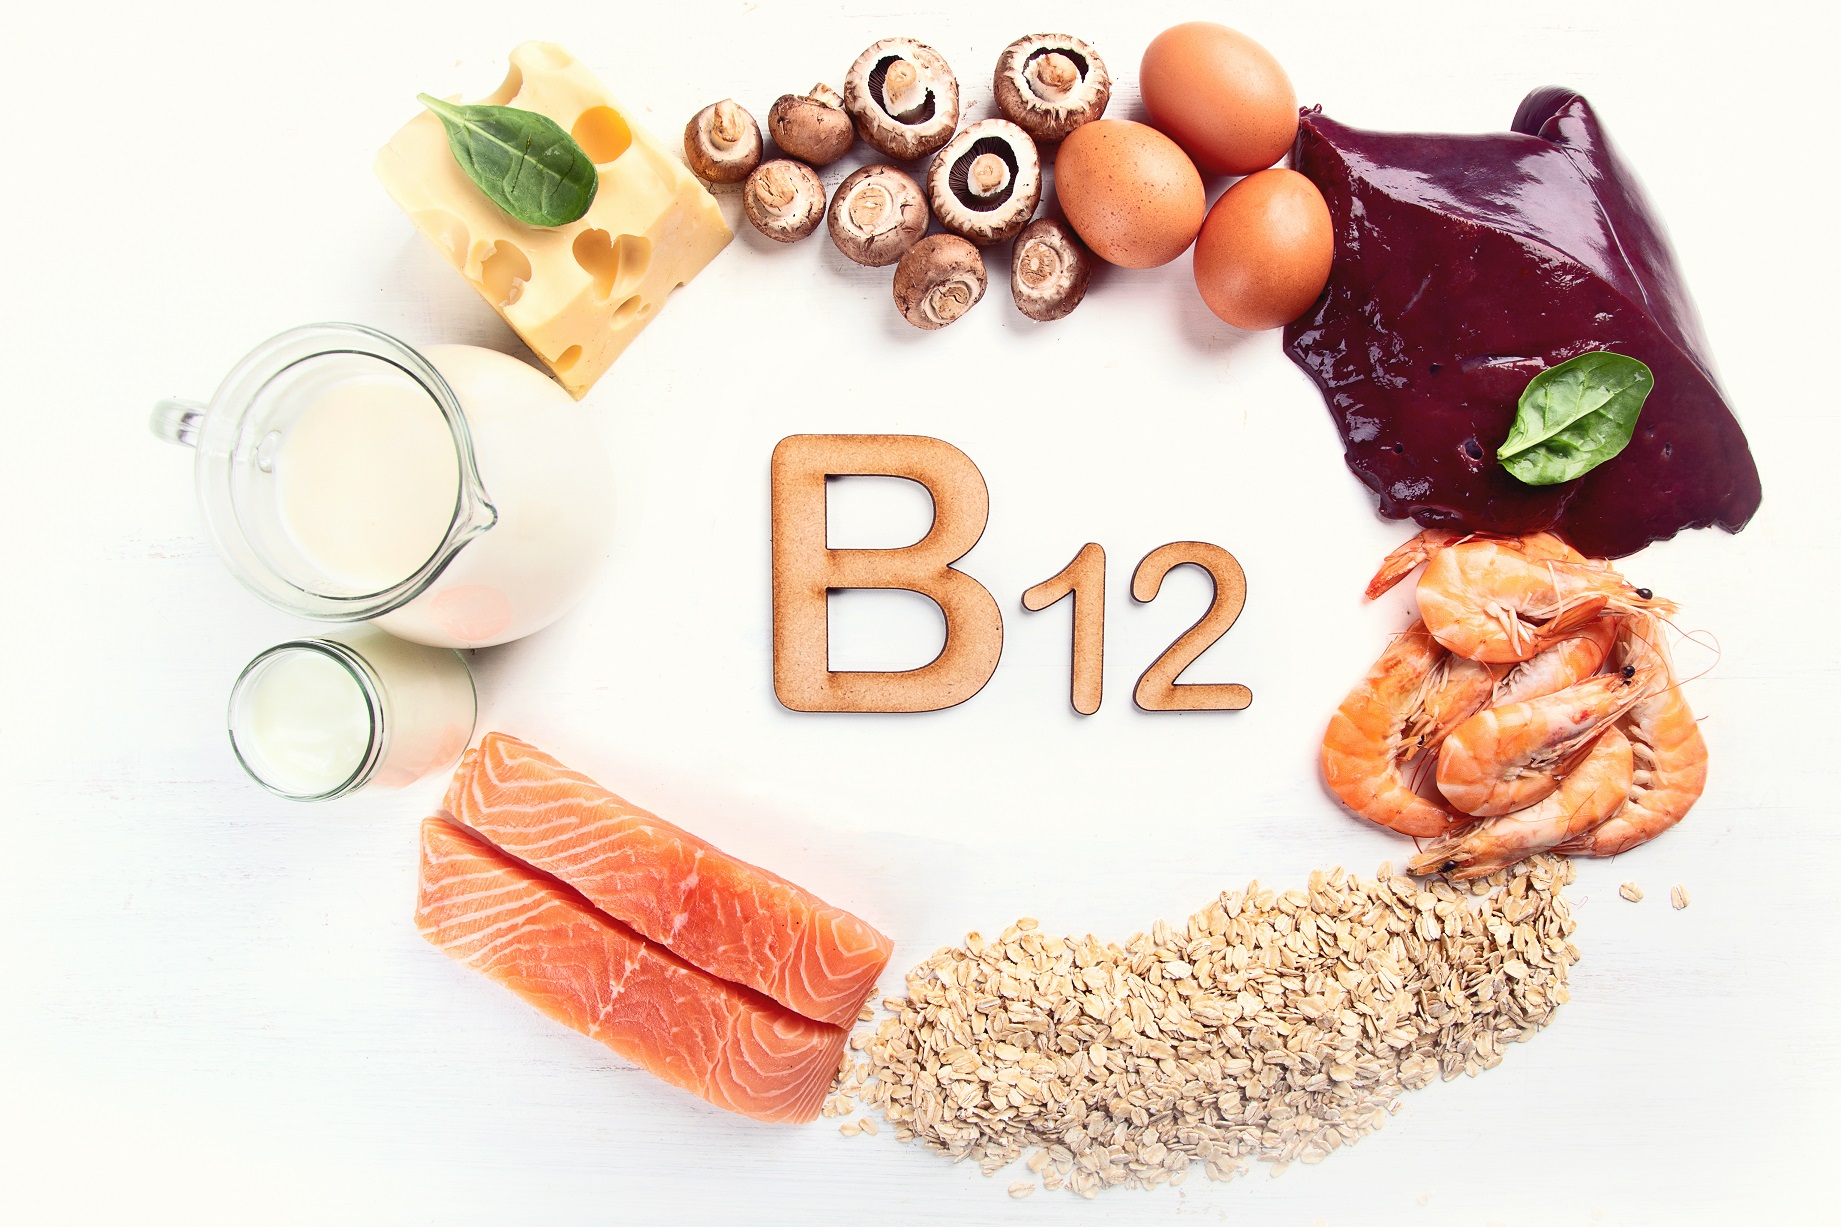 Vitamin B12 inhibits inflammation and promotes tissue regeneration